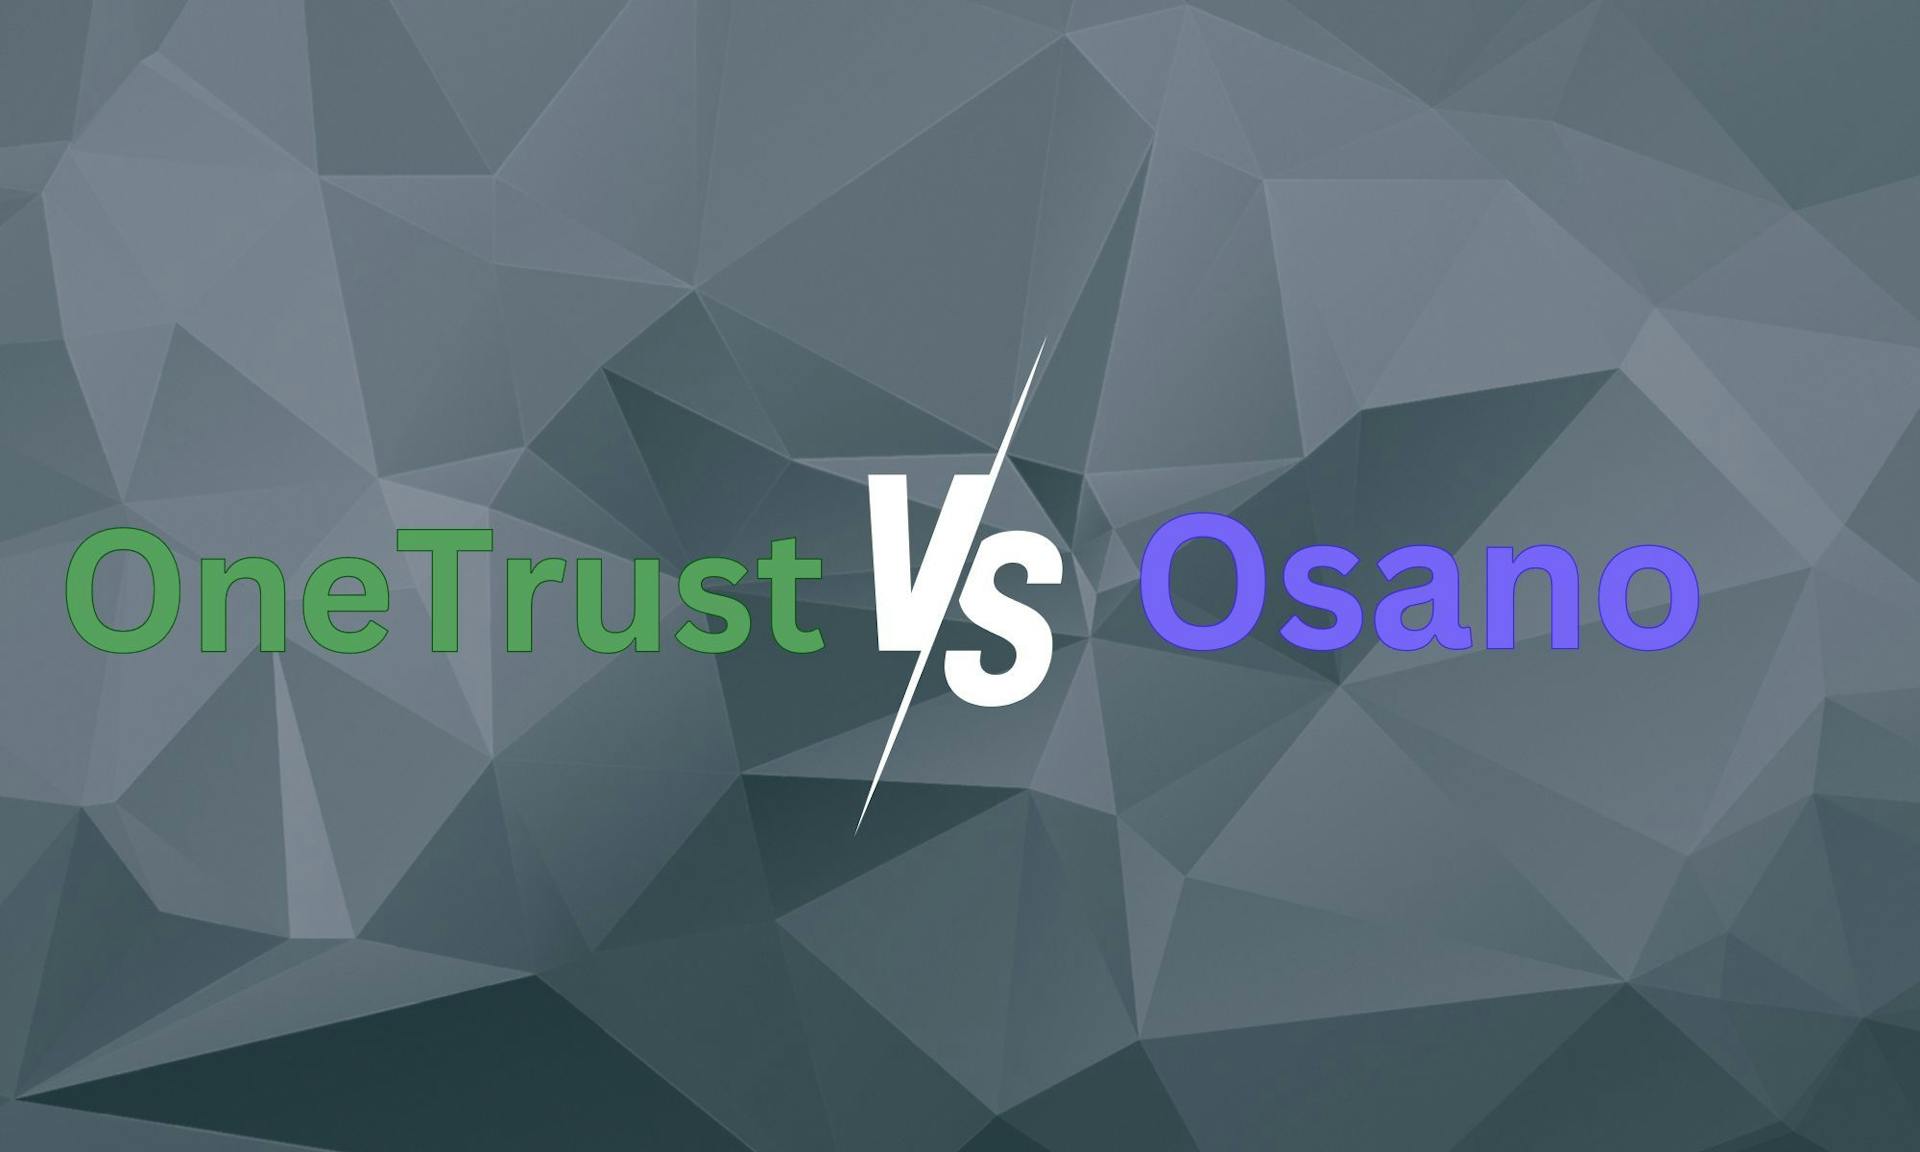 onetrust vs osano